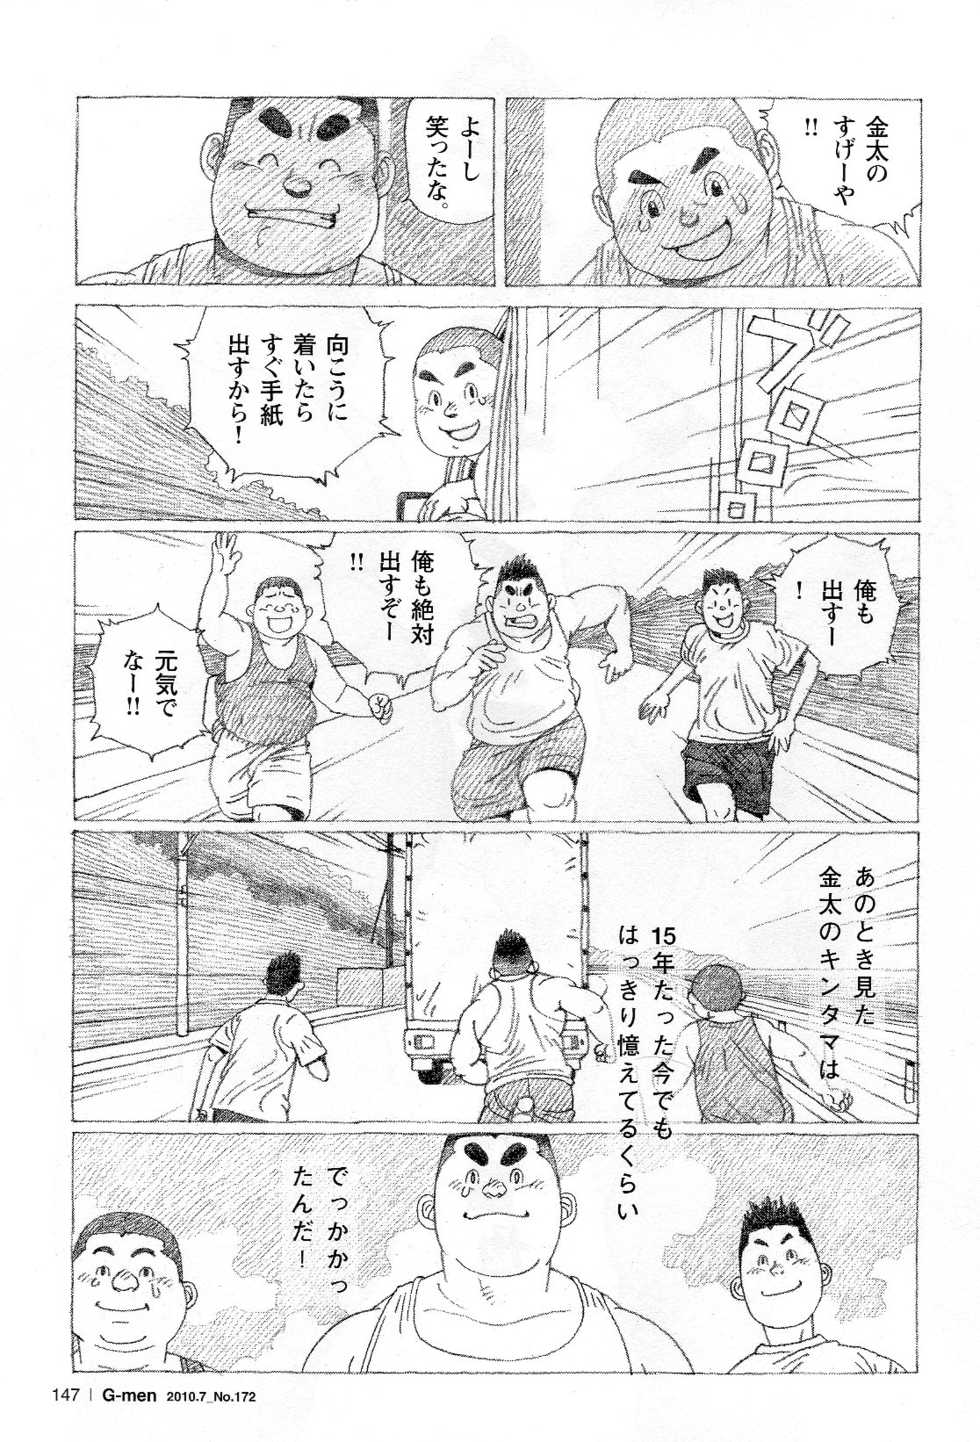 [Jiraiya] Kinta no Kintama (G-men No.172 2010-07) - Page 3